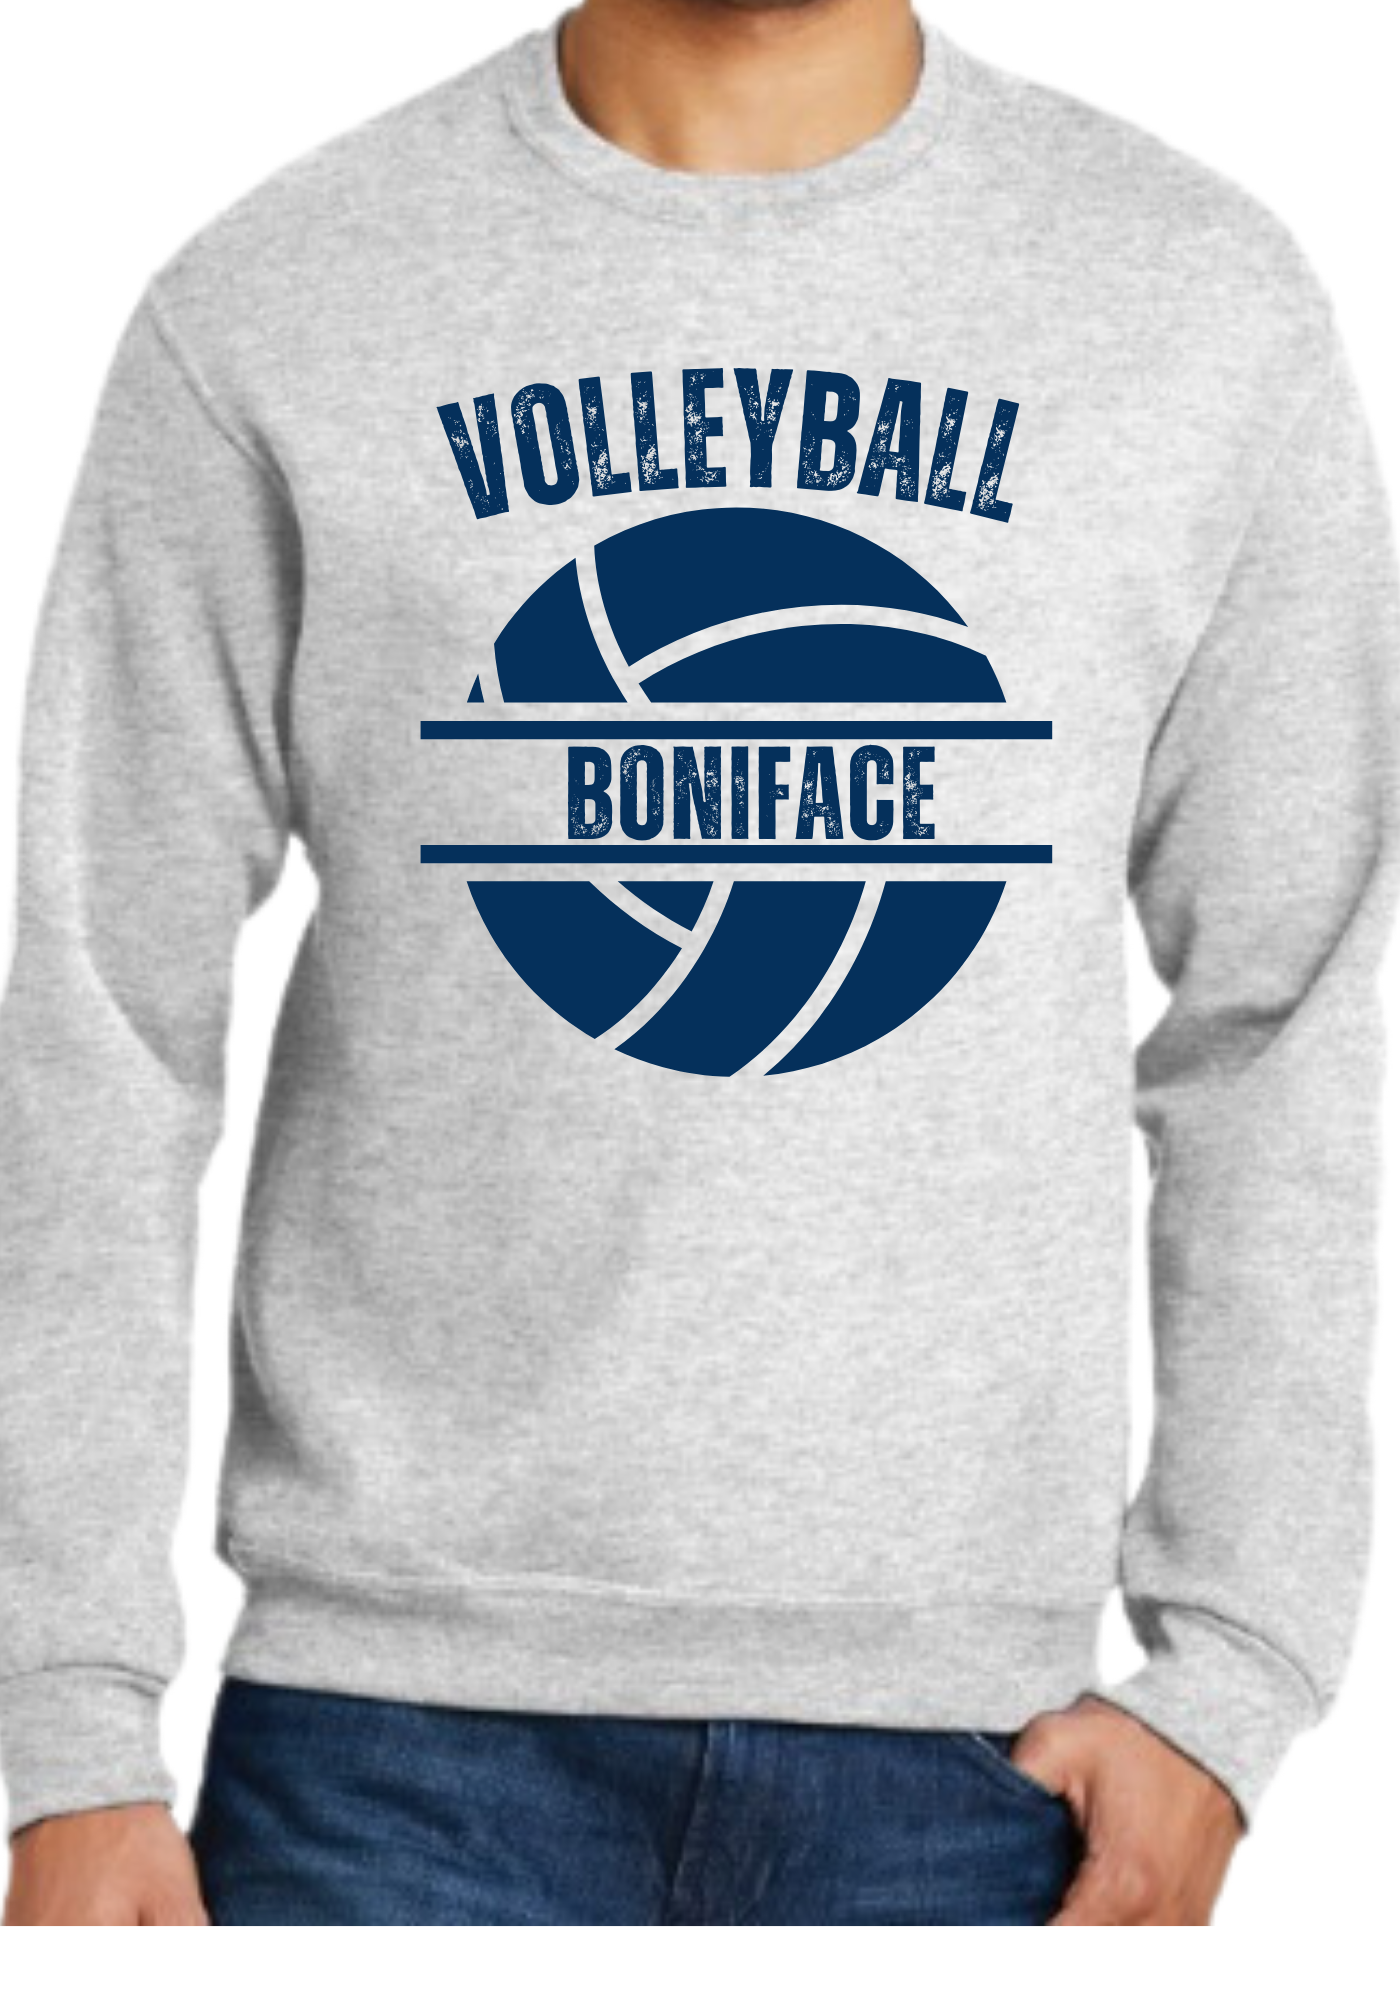 Volleyball Crew Neck Sweatshirt